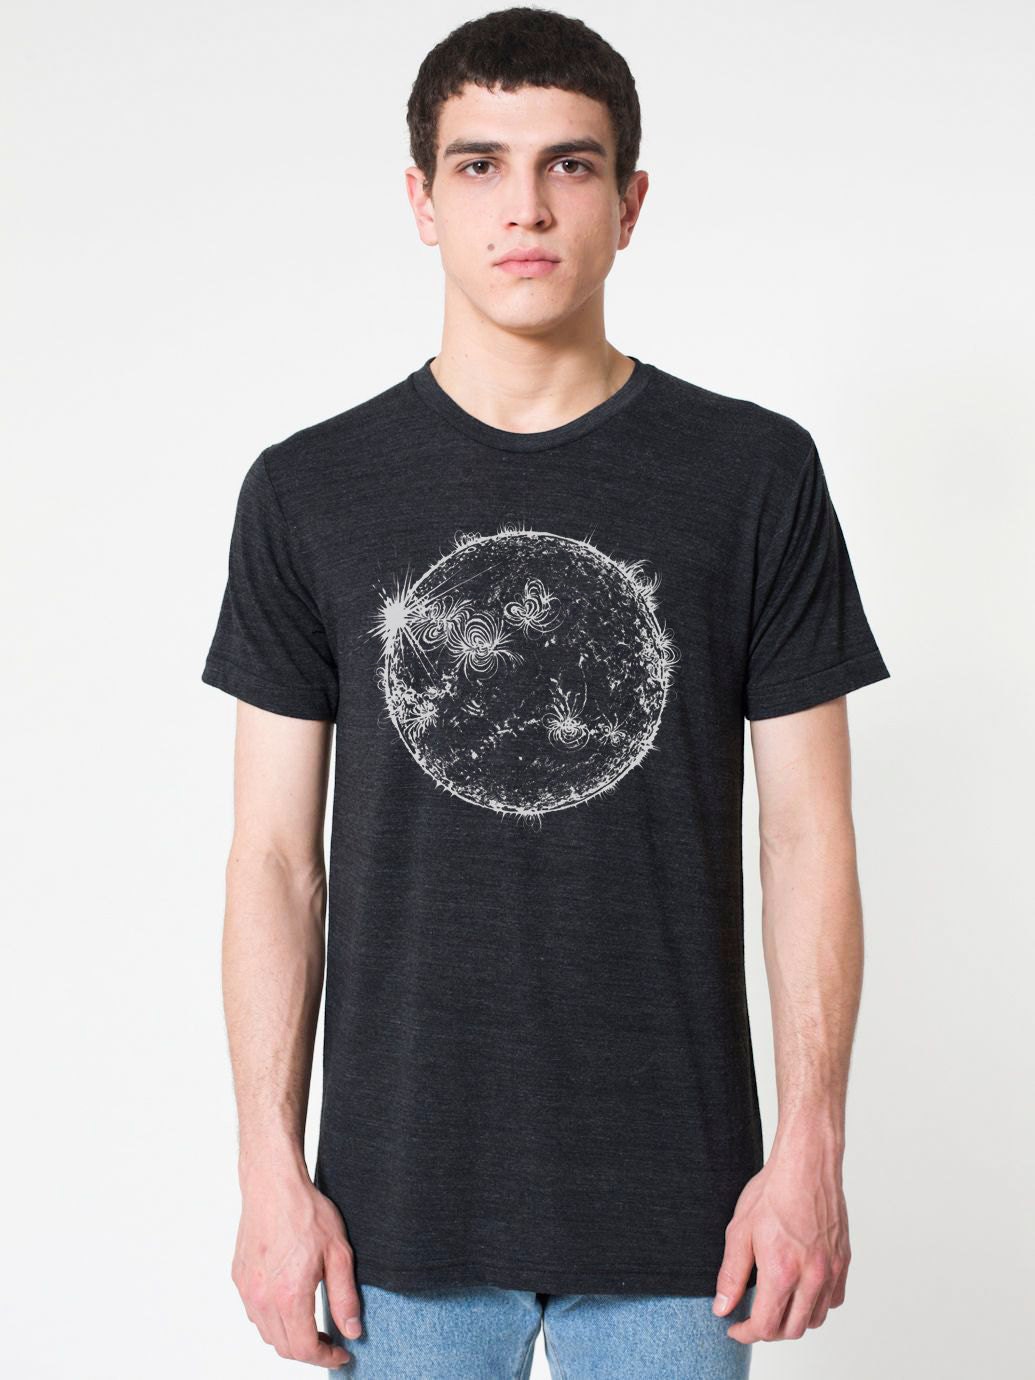 Sun t-Shirt Space Shirt womens clothing black space | Etsy